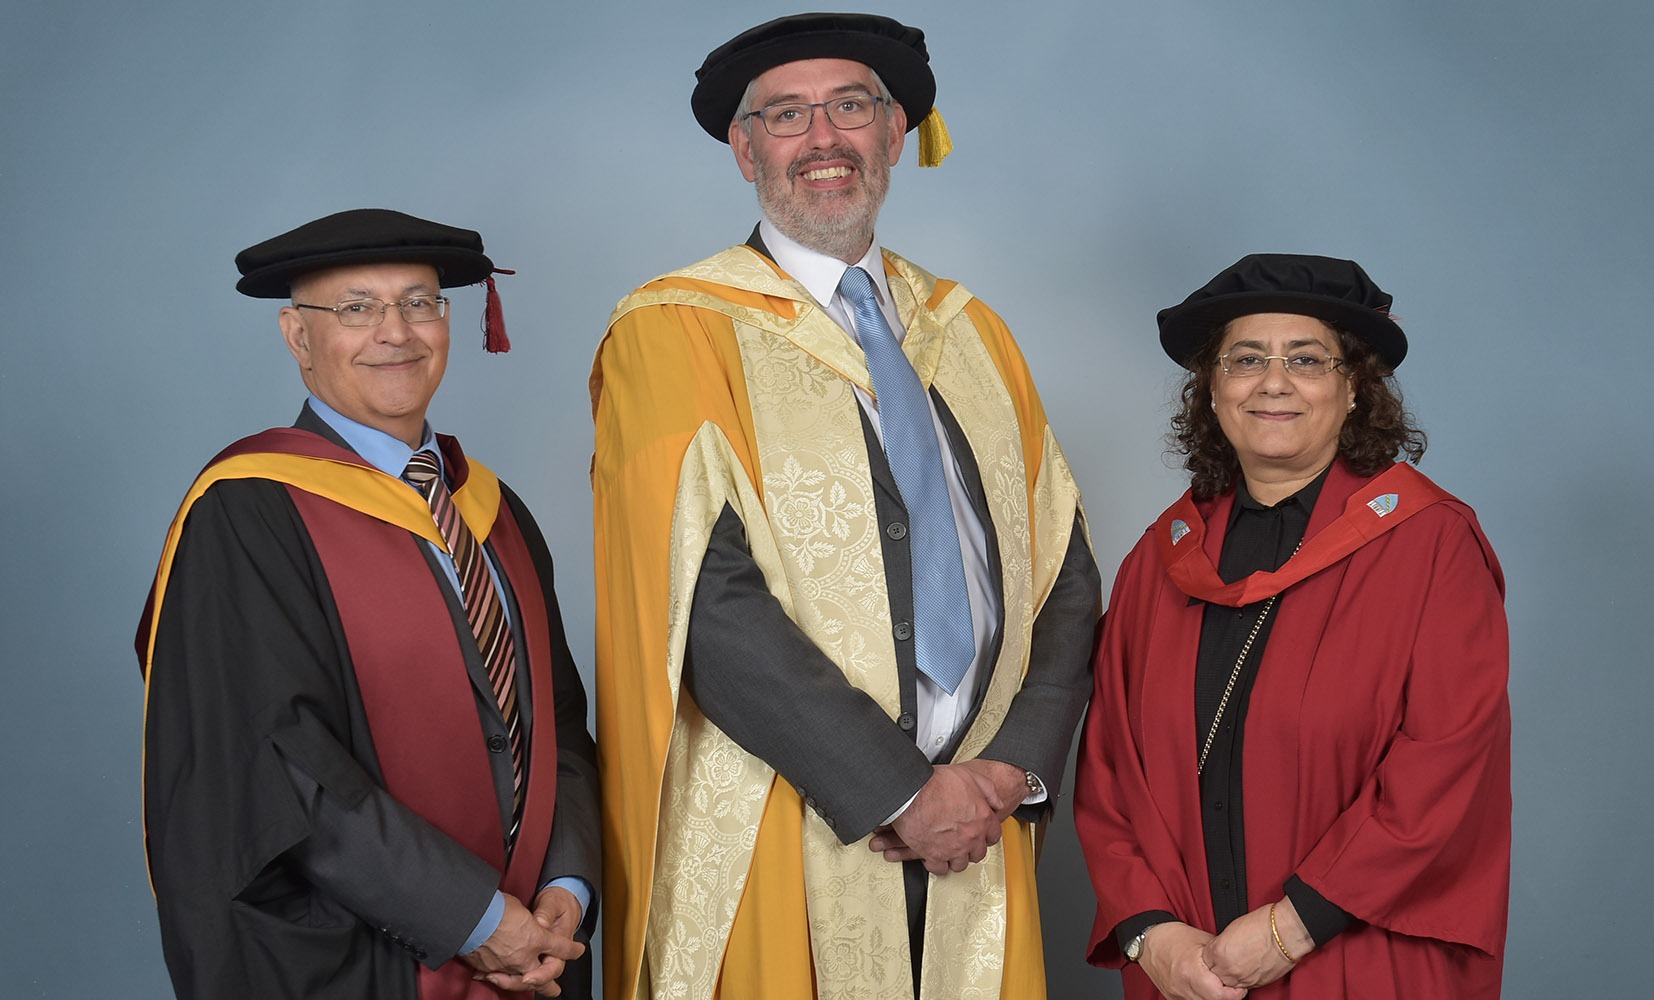 Brandauer’s Crozier awarded Honorary Doctorate from Birmingham City University